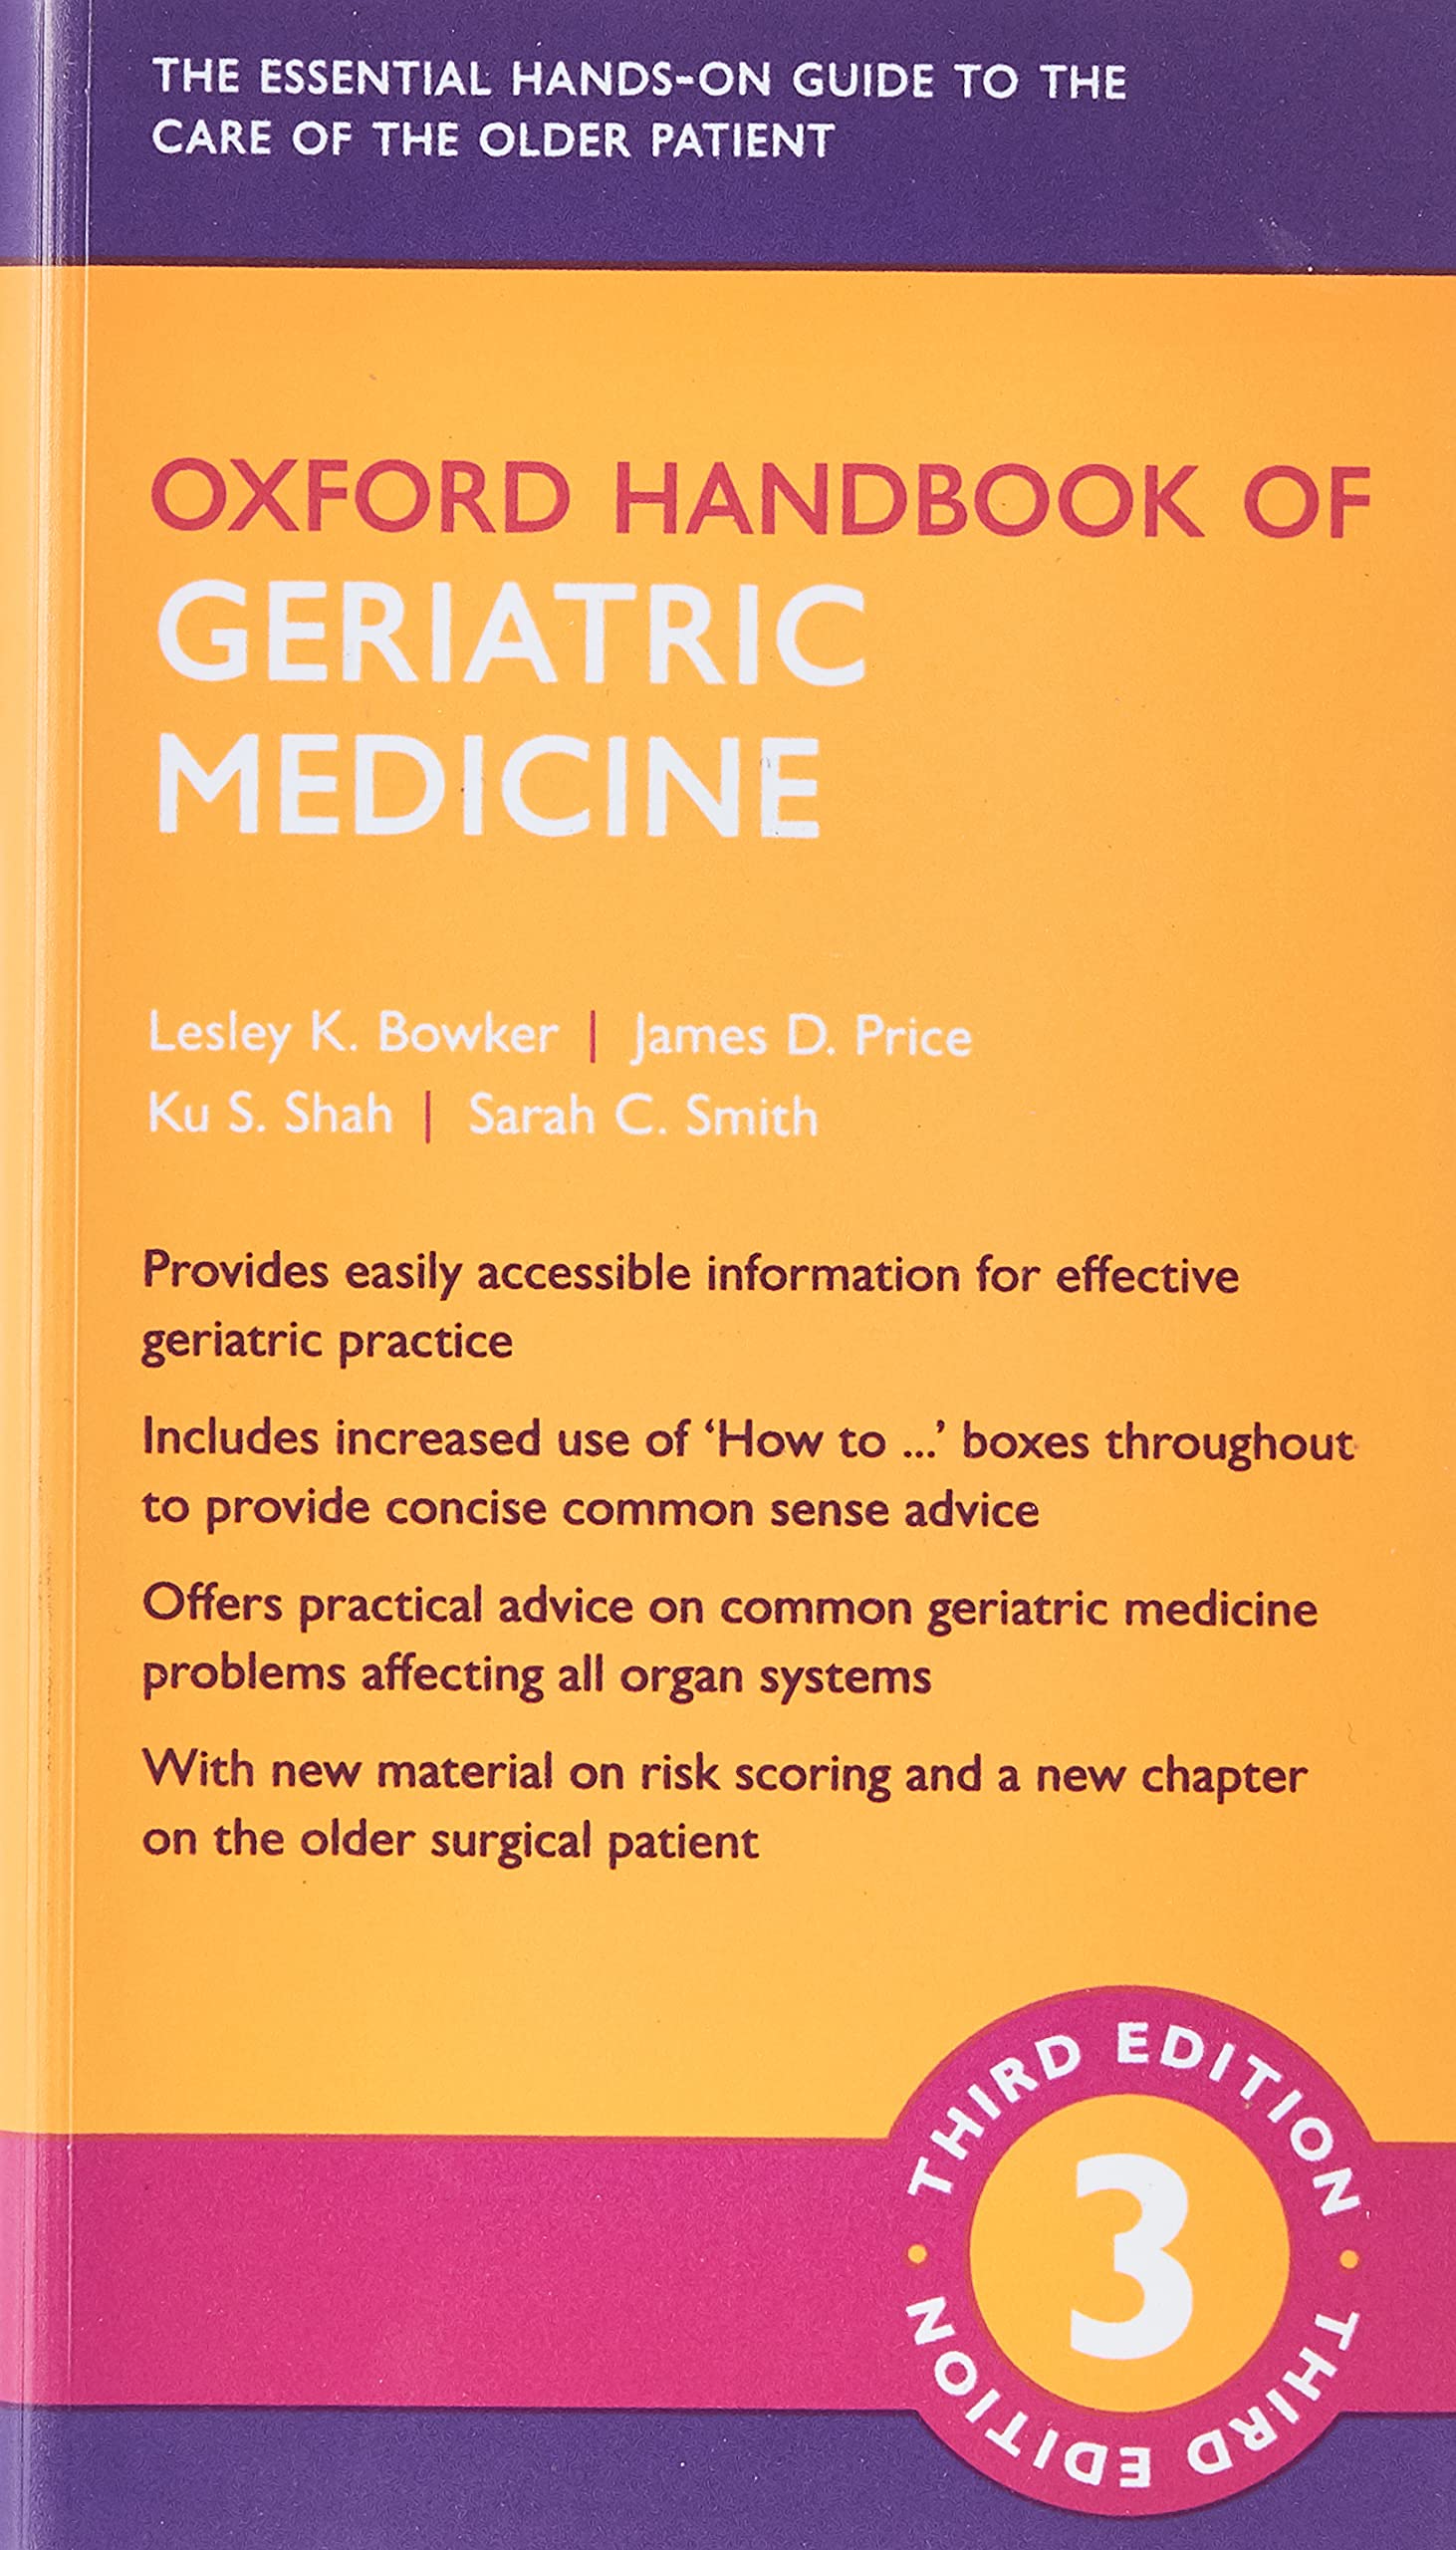 Oxford Handbook of Geriatric Medicine, 3rd Edition (Oxford Medical Handbooks) by  Lesley K. Bowker